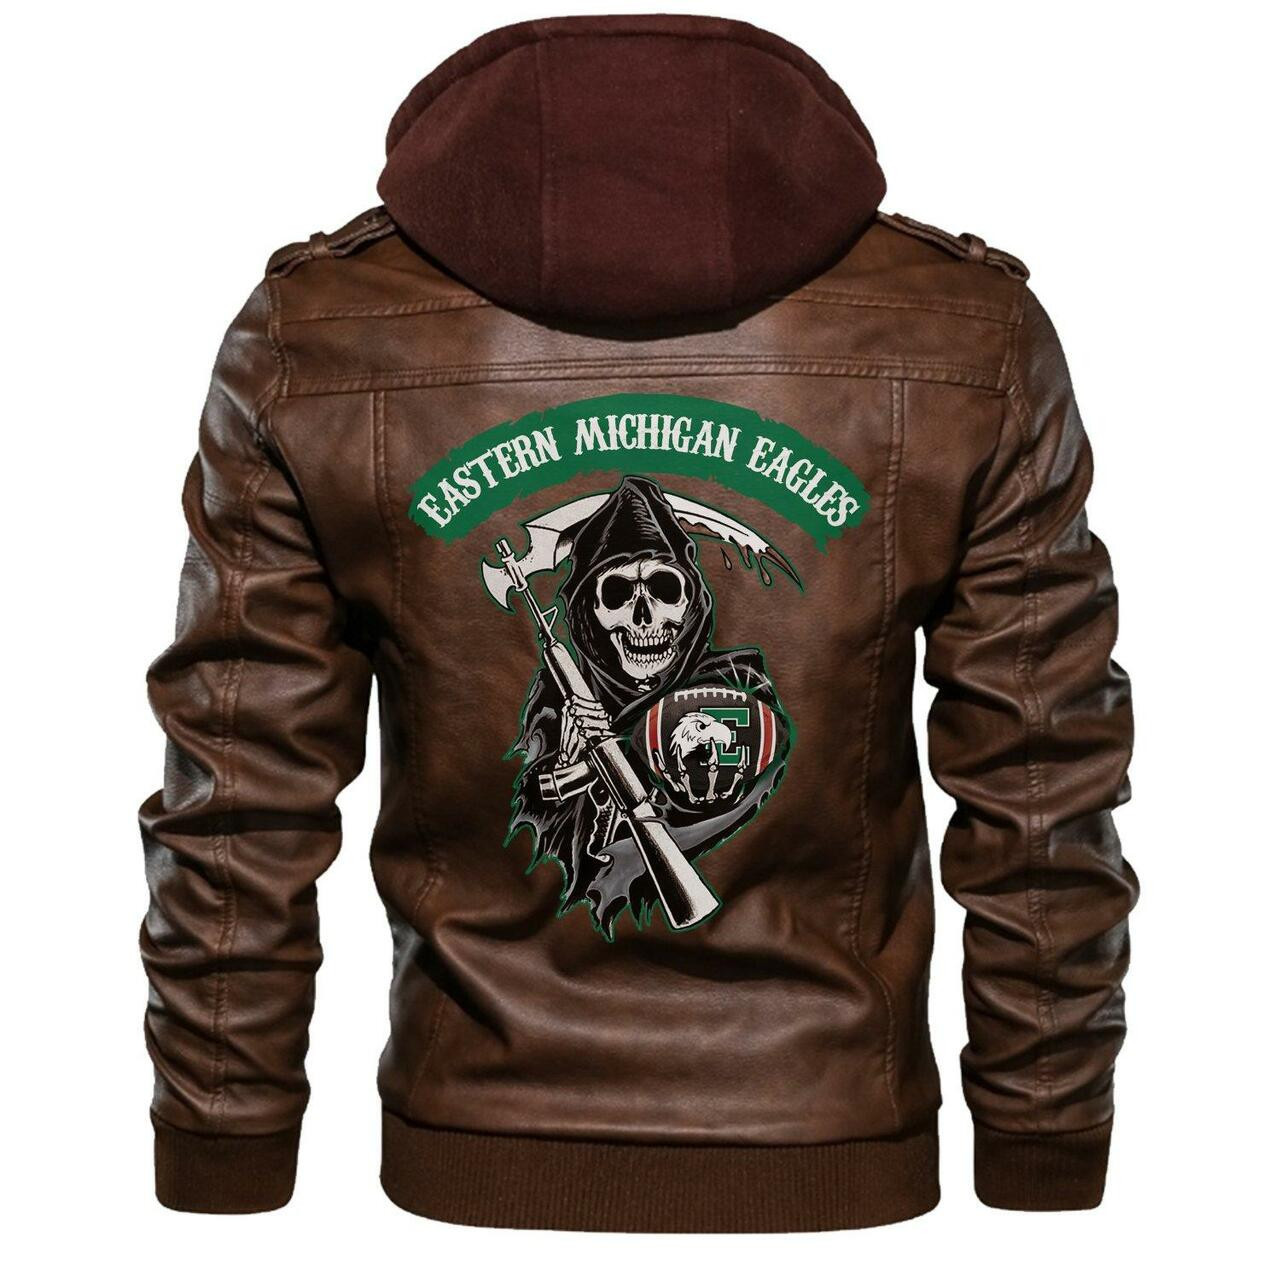 Top leather jacket Sells Best on Techcomshop 41